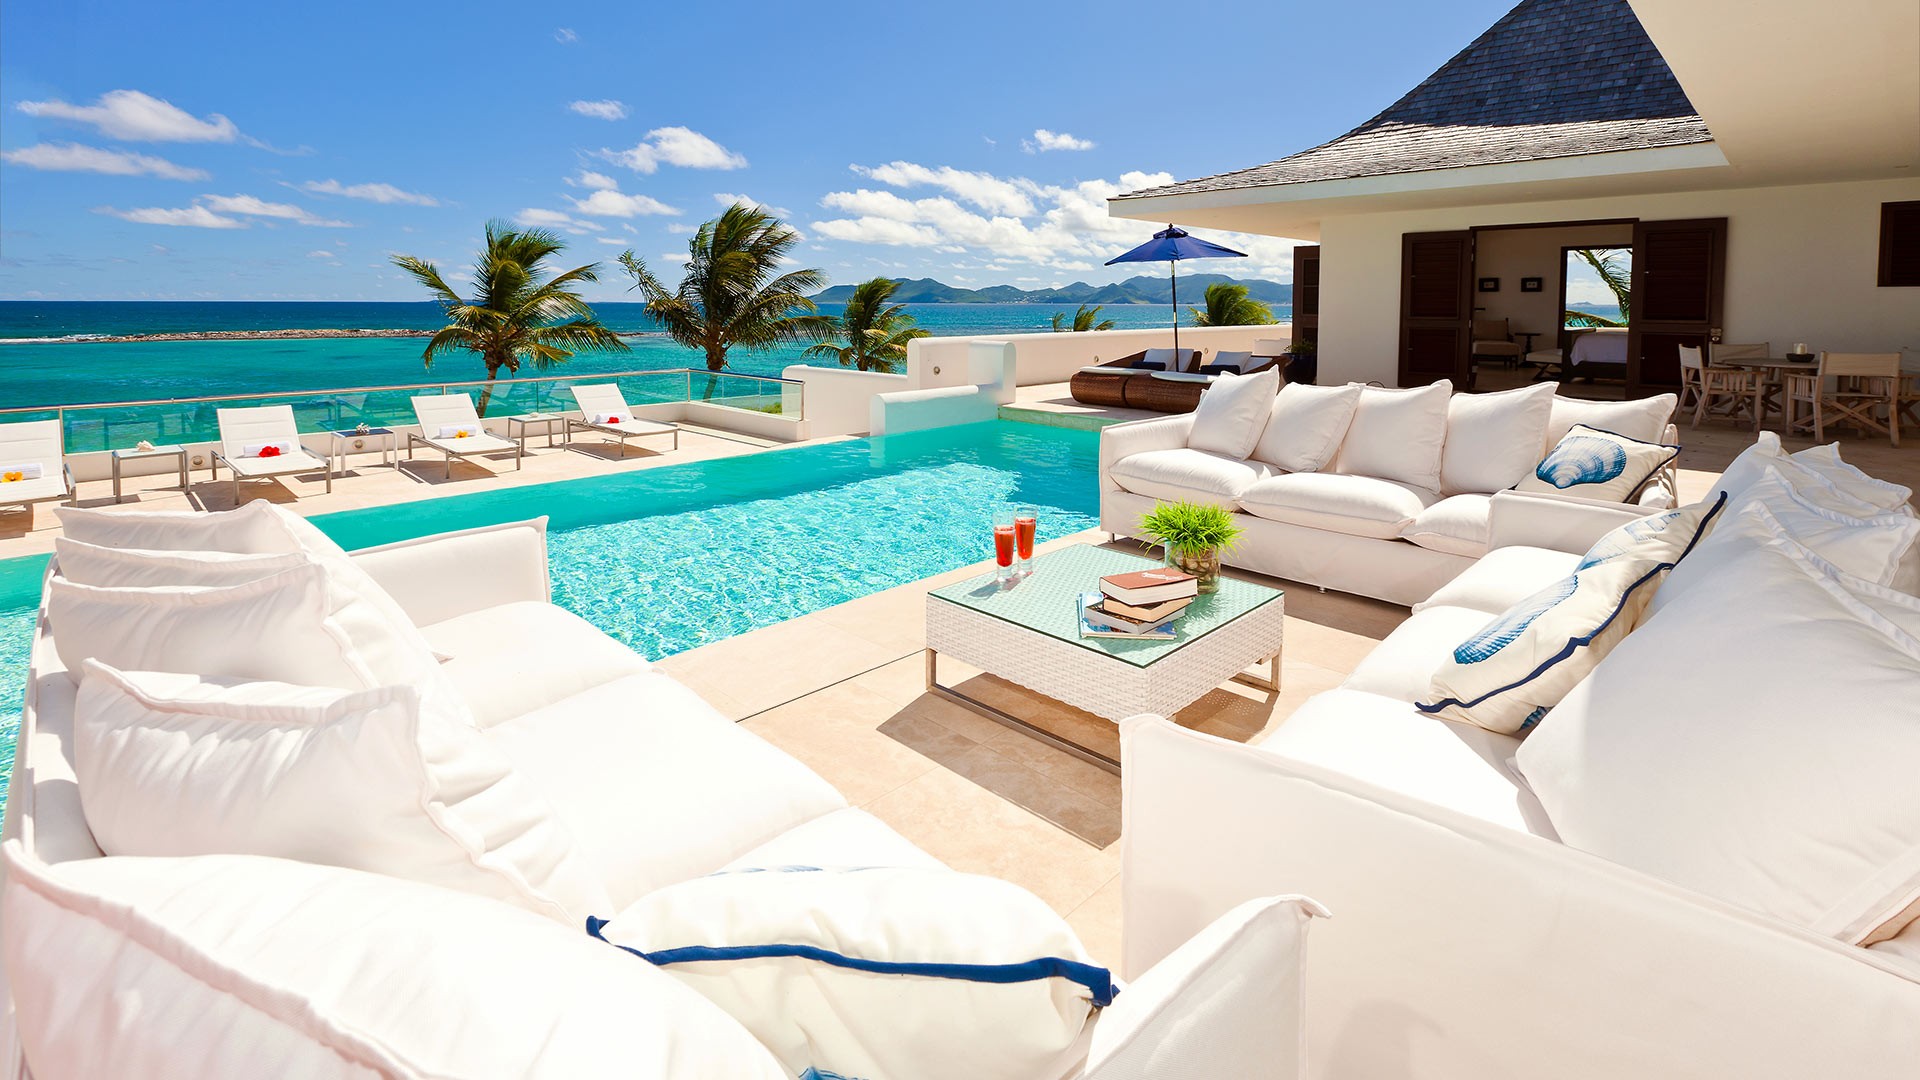 LeBleu-Villa-Anguilla-Rental-Pooldeck-lounge